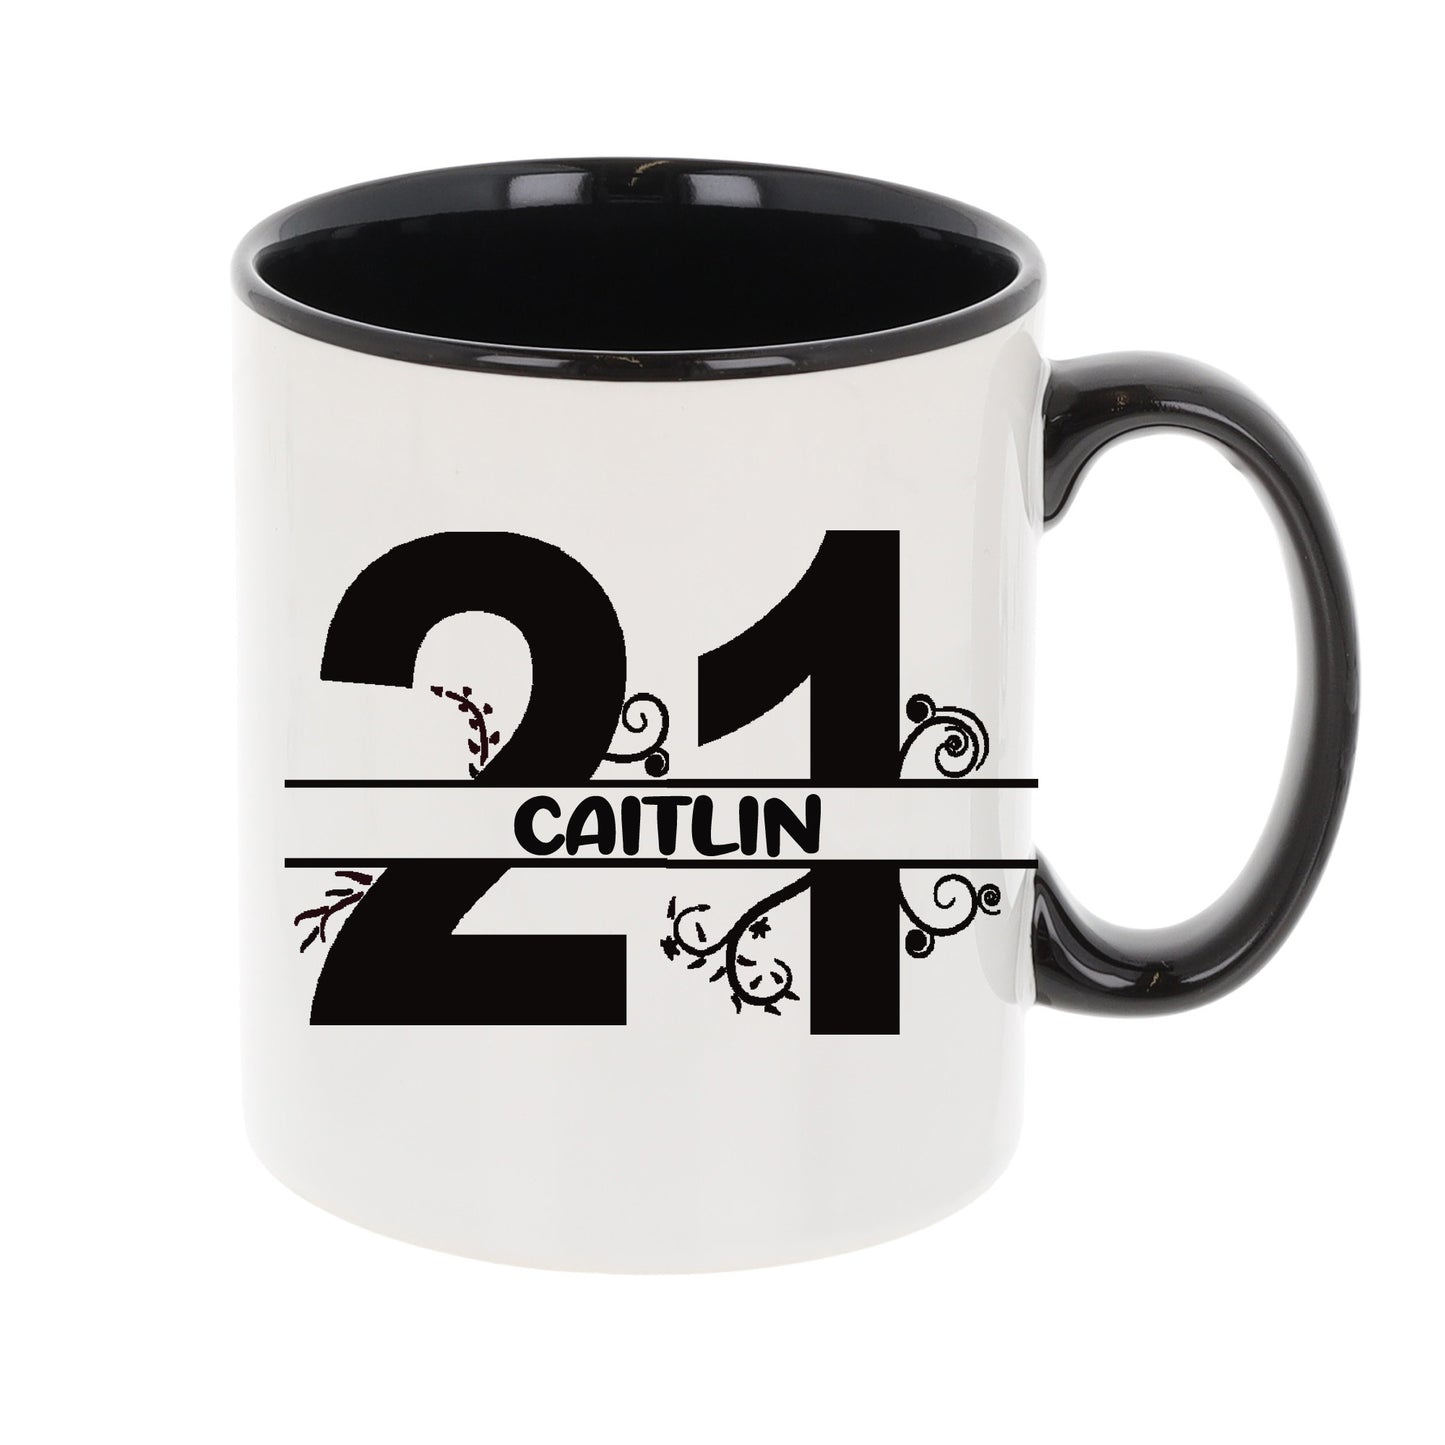 Personalised Filled 21st Birthday Mug  - Always Looking Good - Black Mug Only  